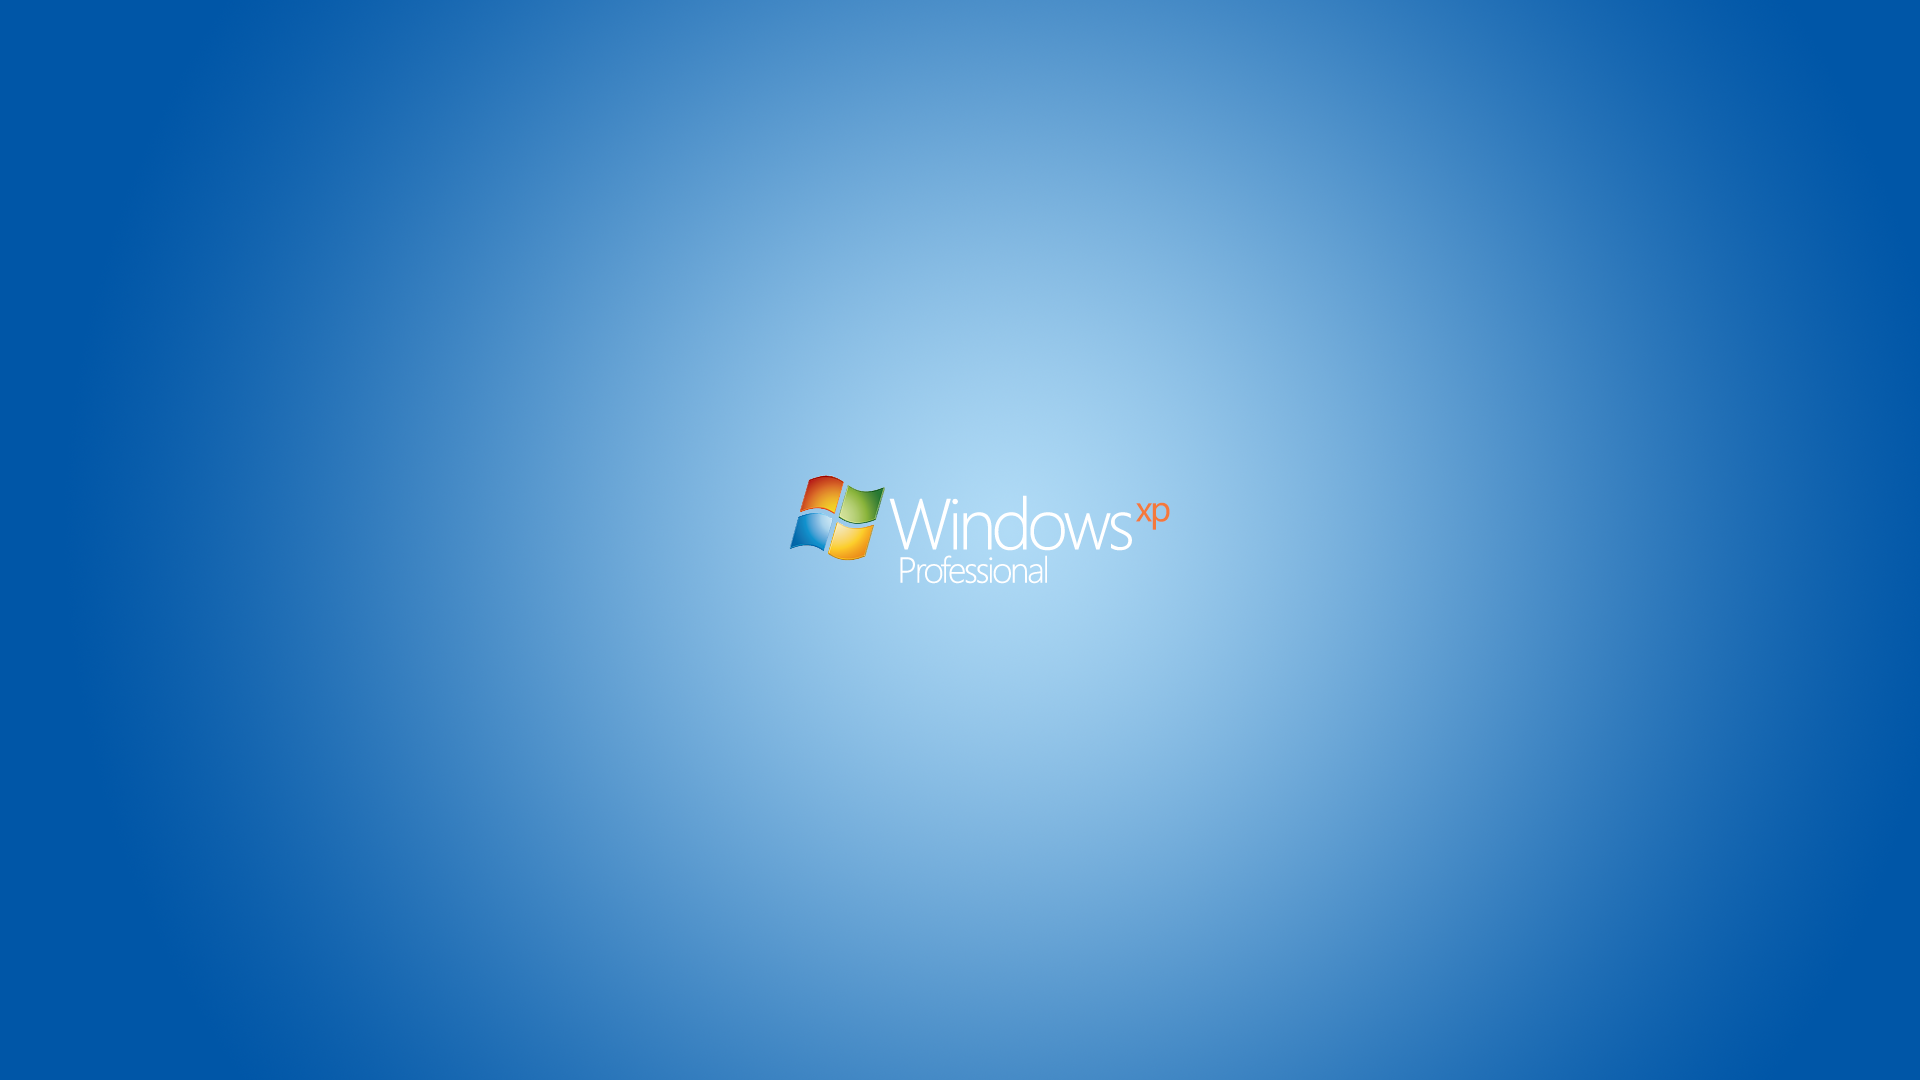 Windows Xp Professional Wallpaper By Scimiazzurro On